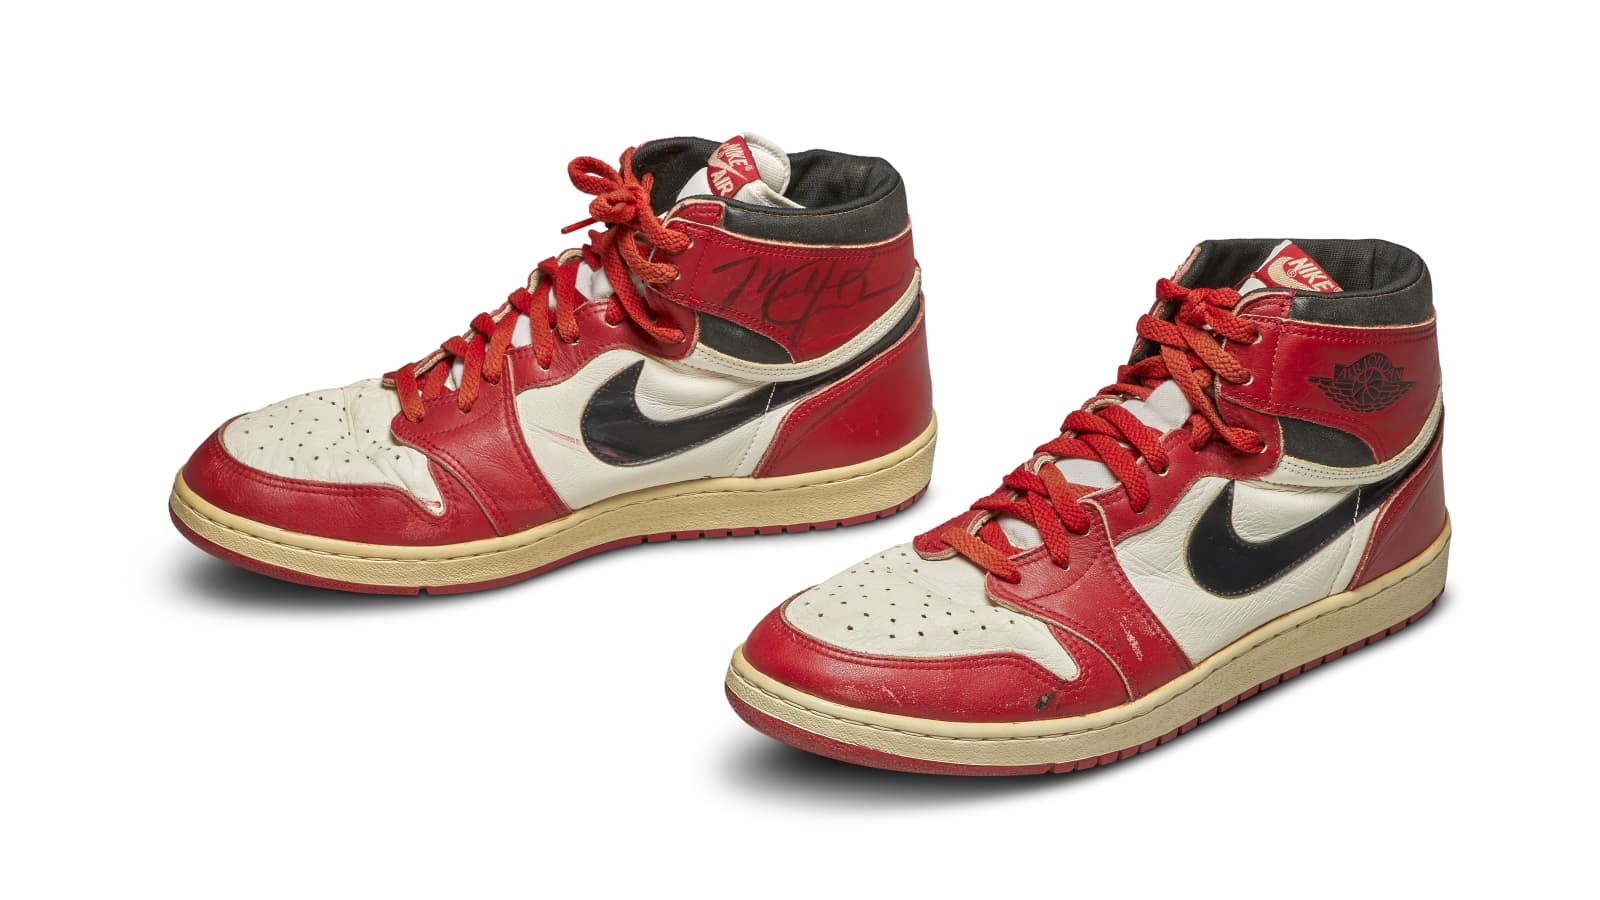 Michael Air Jordan 1's sell for record-setting $560,000